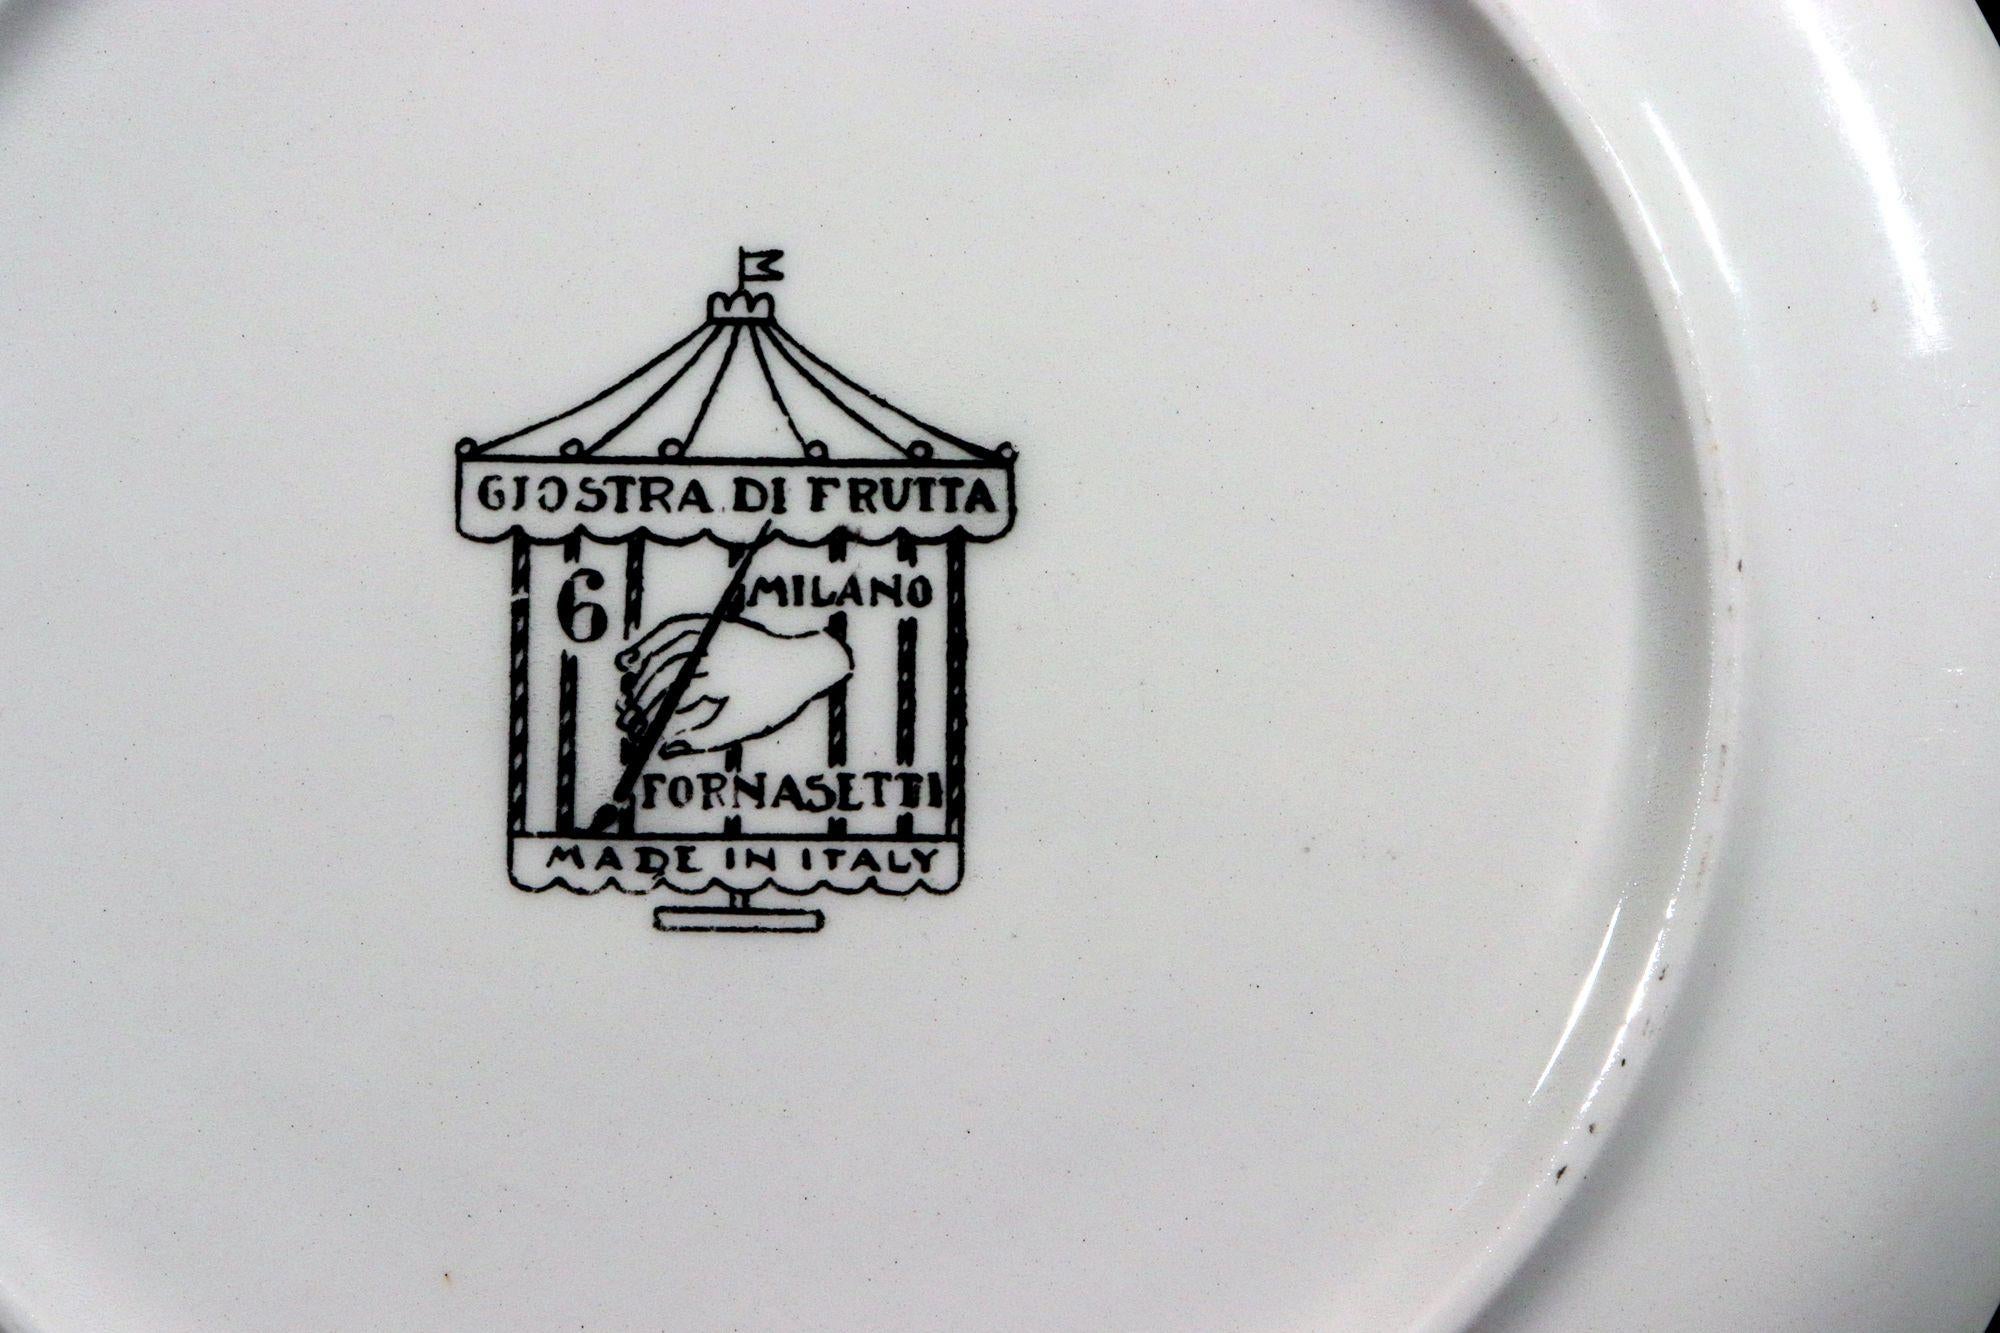 Mid-Century Modern Piero Fornasetti Porcelain Plates, Giostra di Frutta (Merry-go-Round of Fruit) For Sale